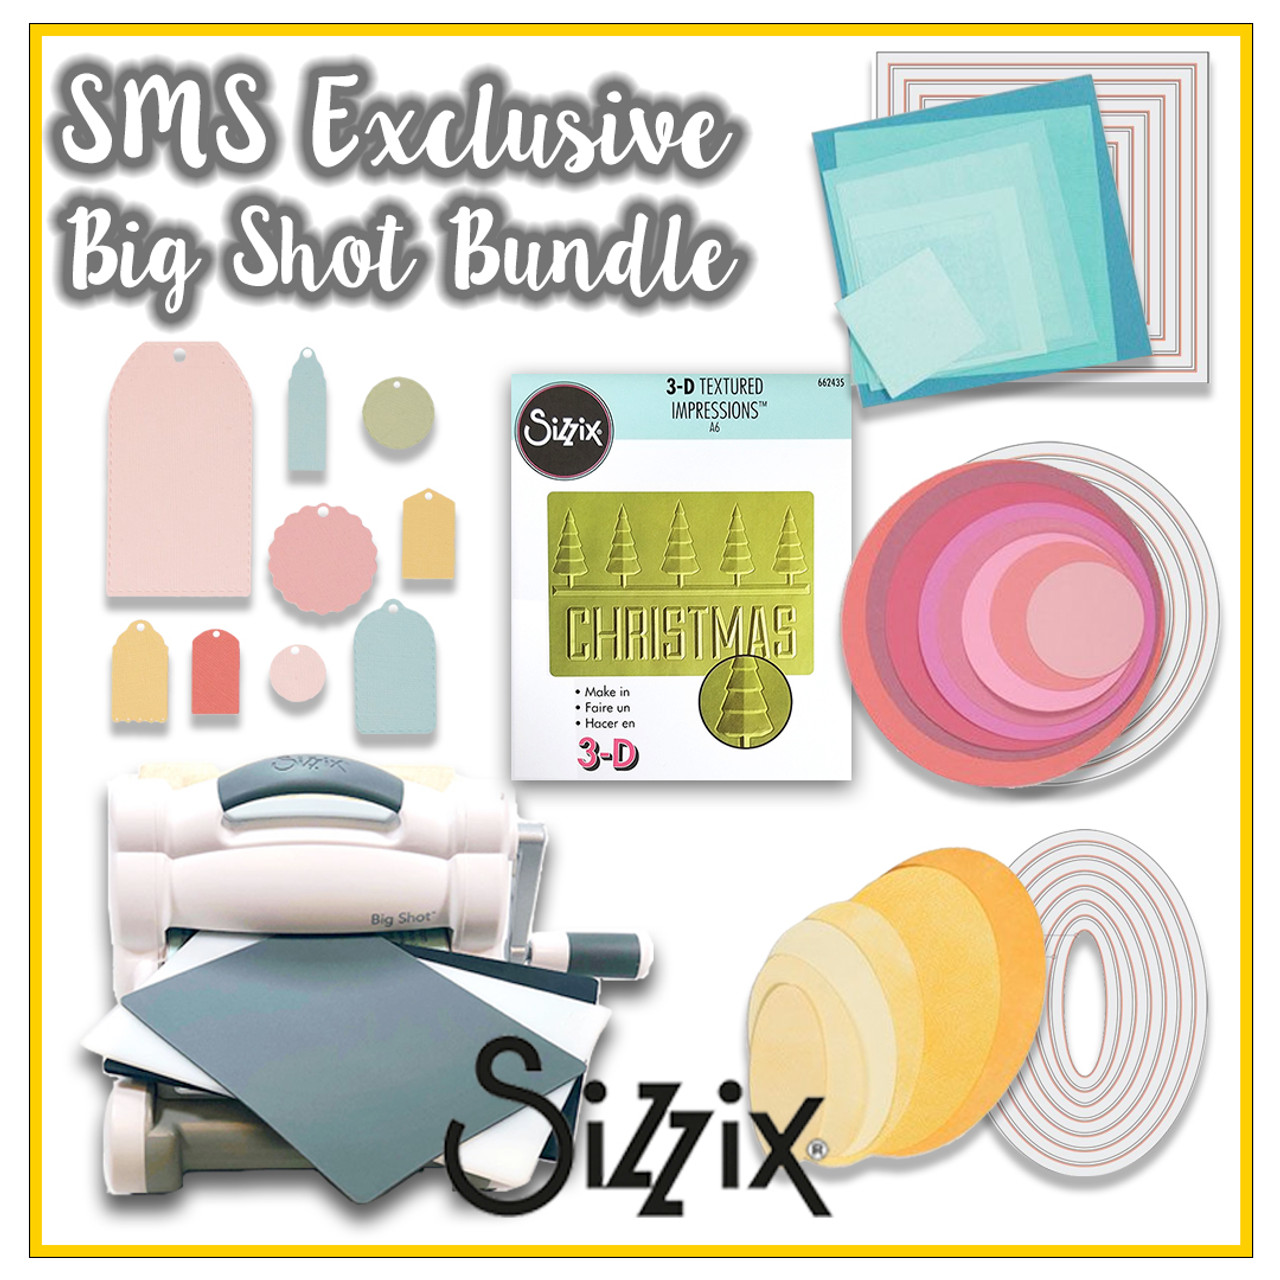 Introducing the Big Shot® Plus Starter Kit - Sizzix 